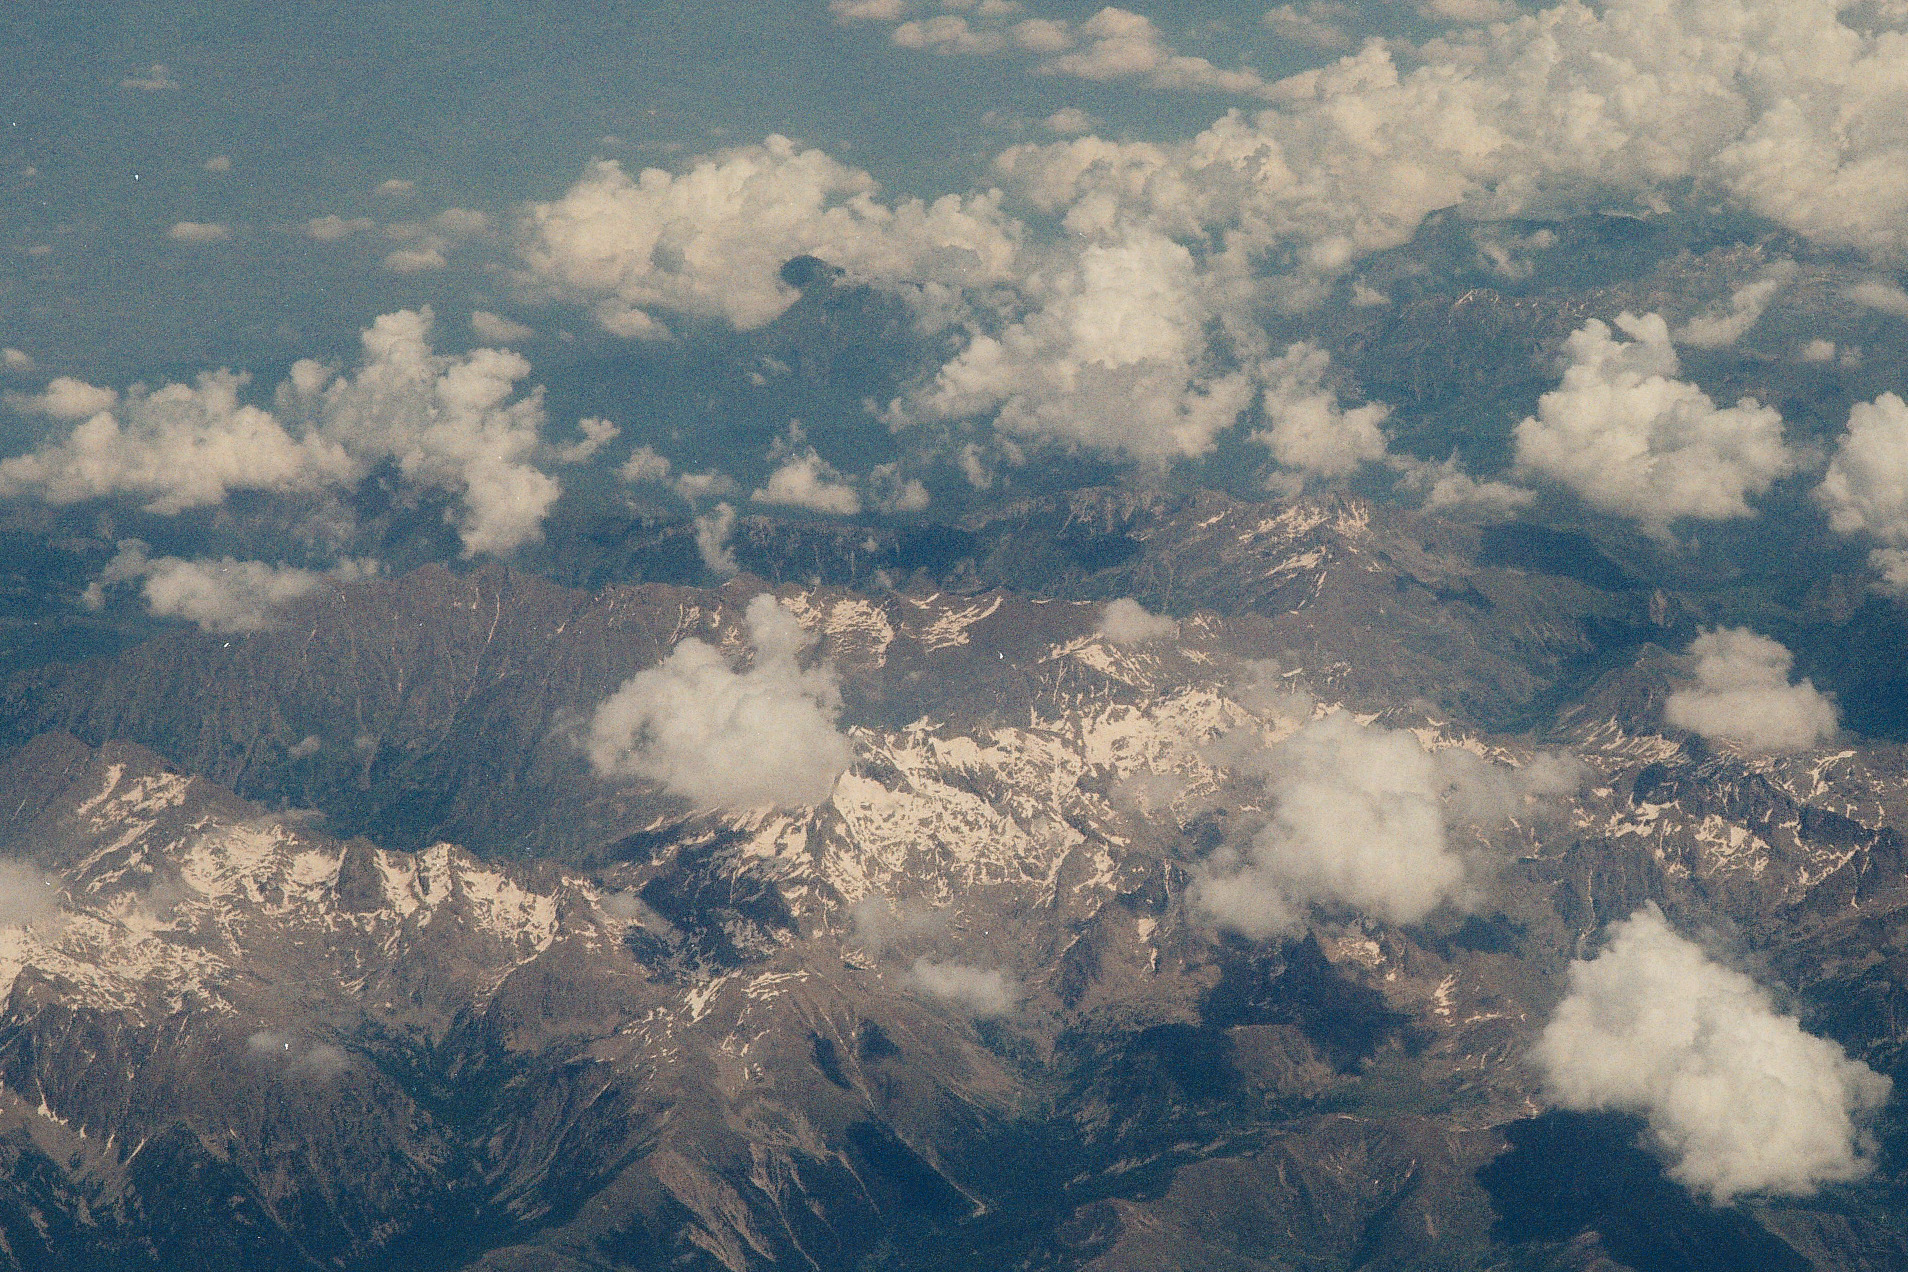 The Alps